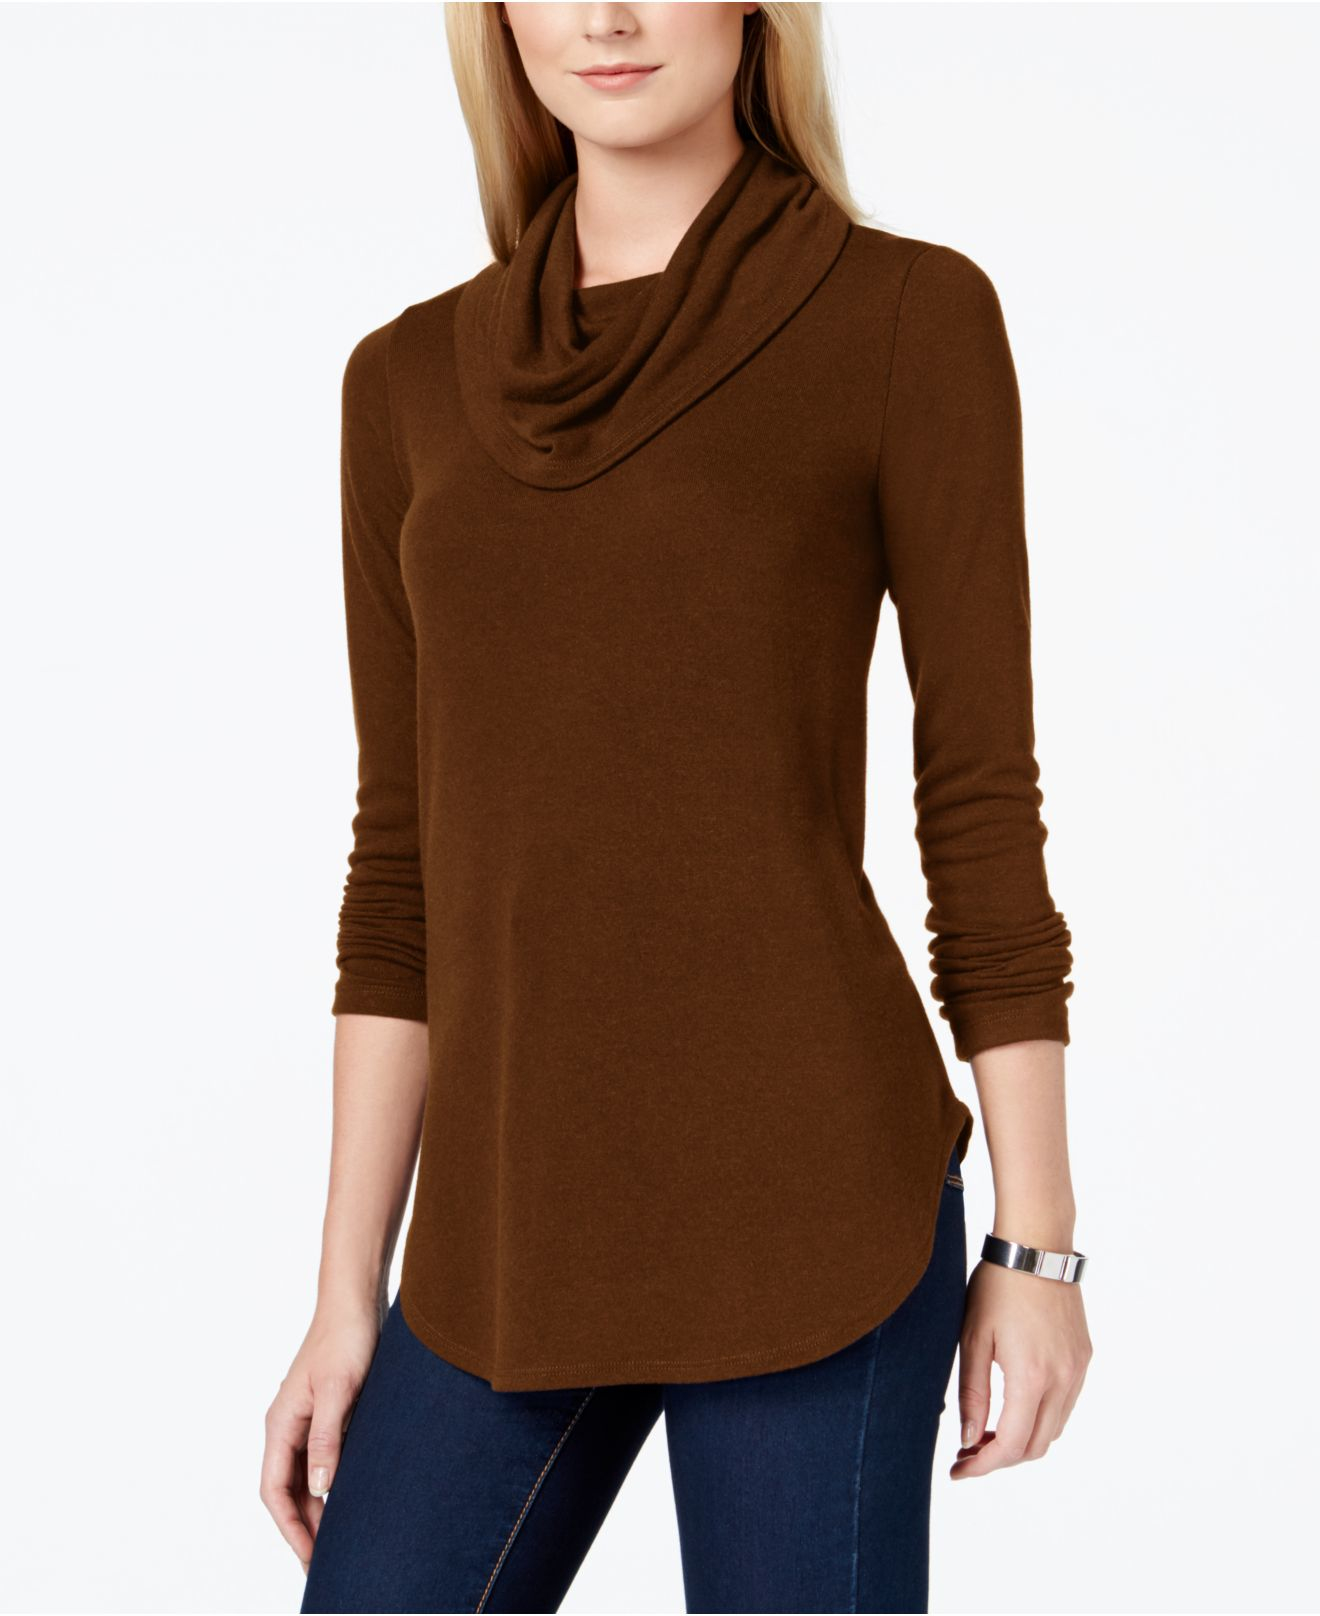 Karen Kane Cowl-neck Light Weight Sweater in Brown - Lyst